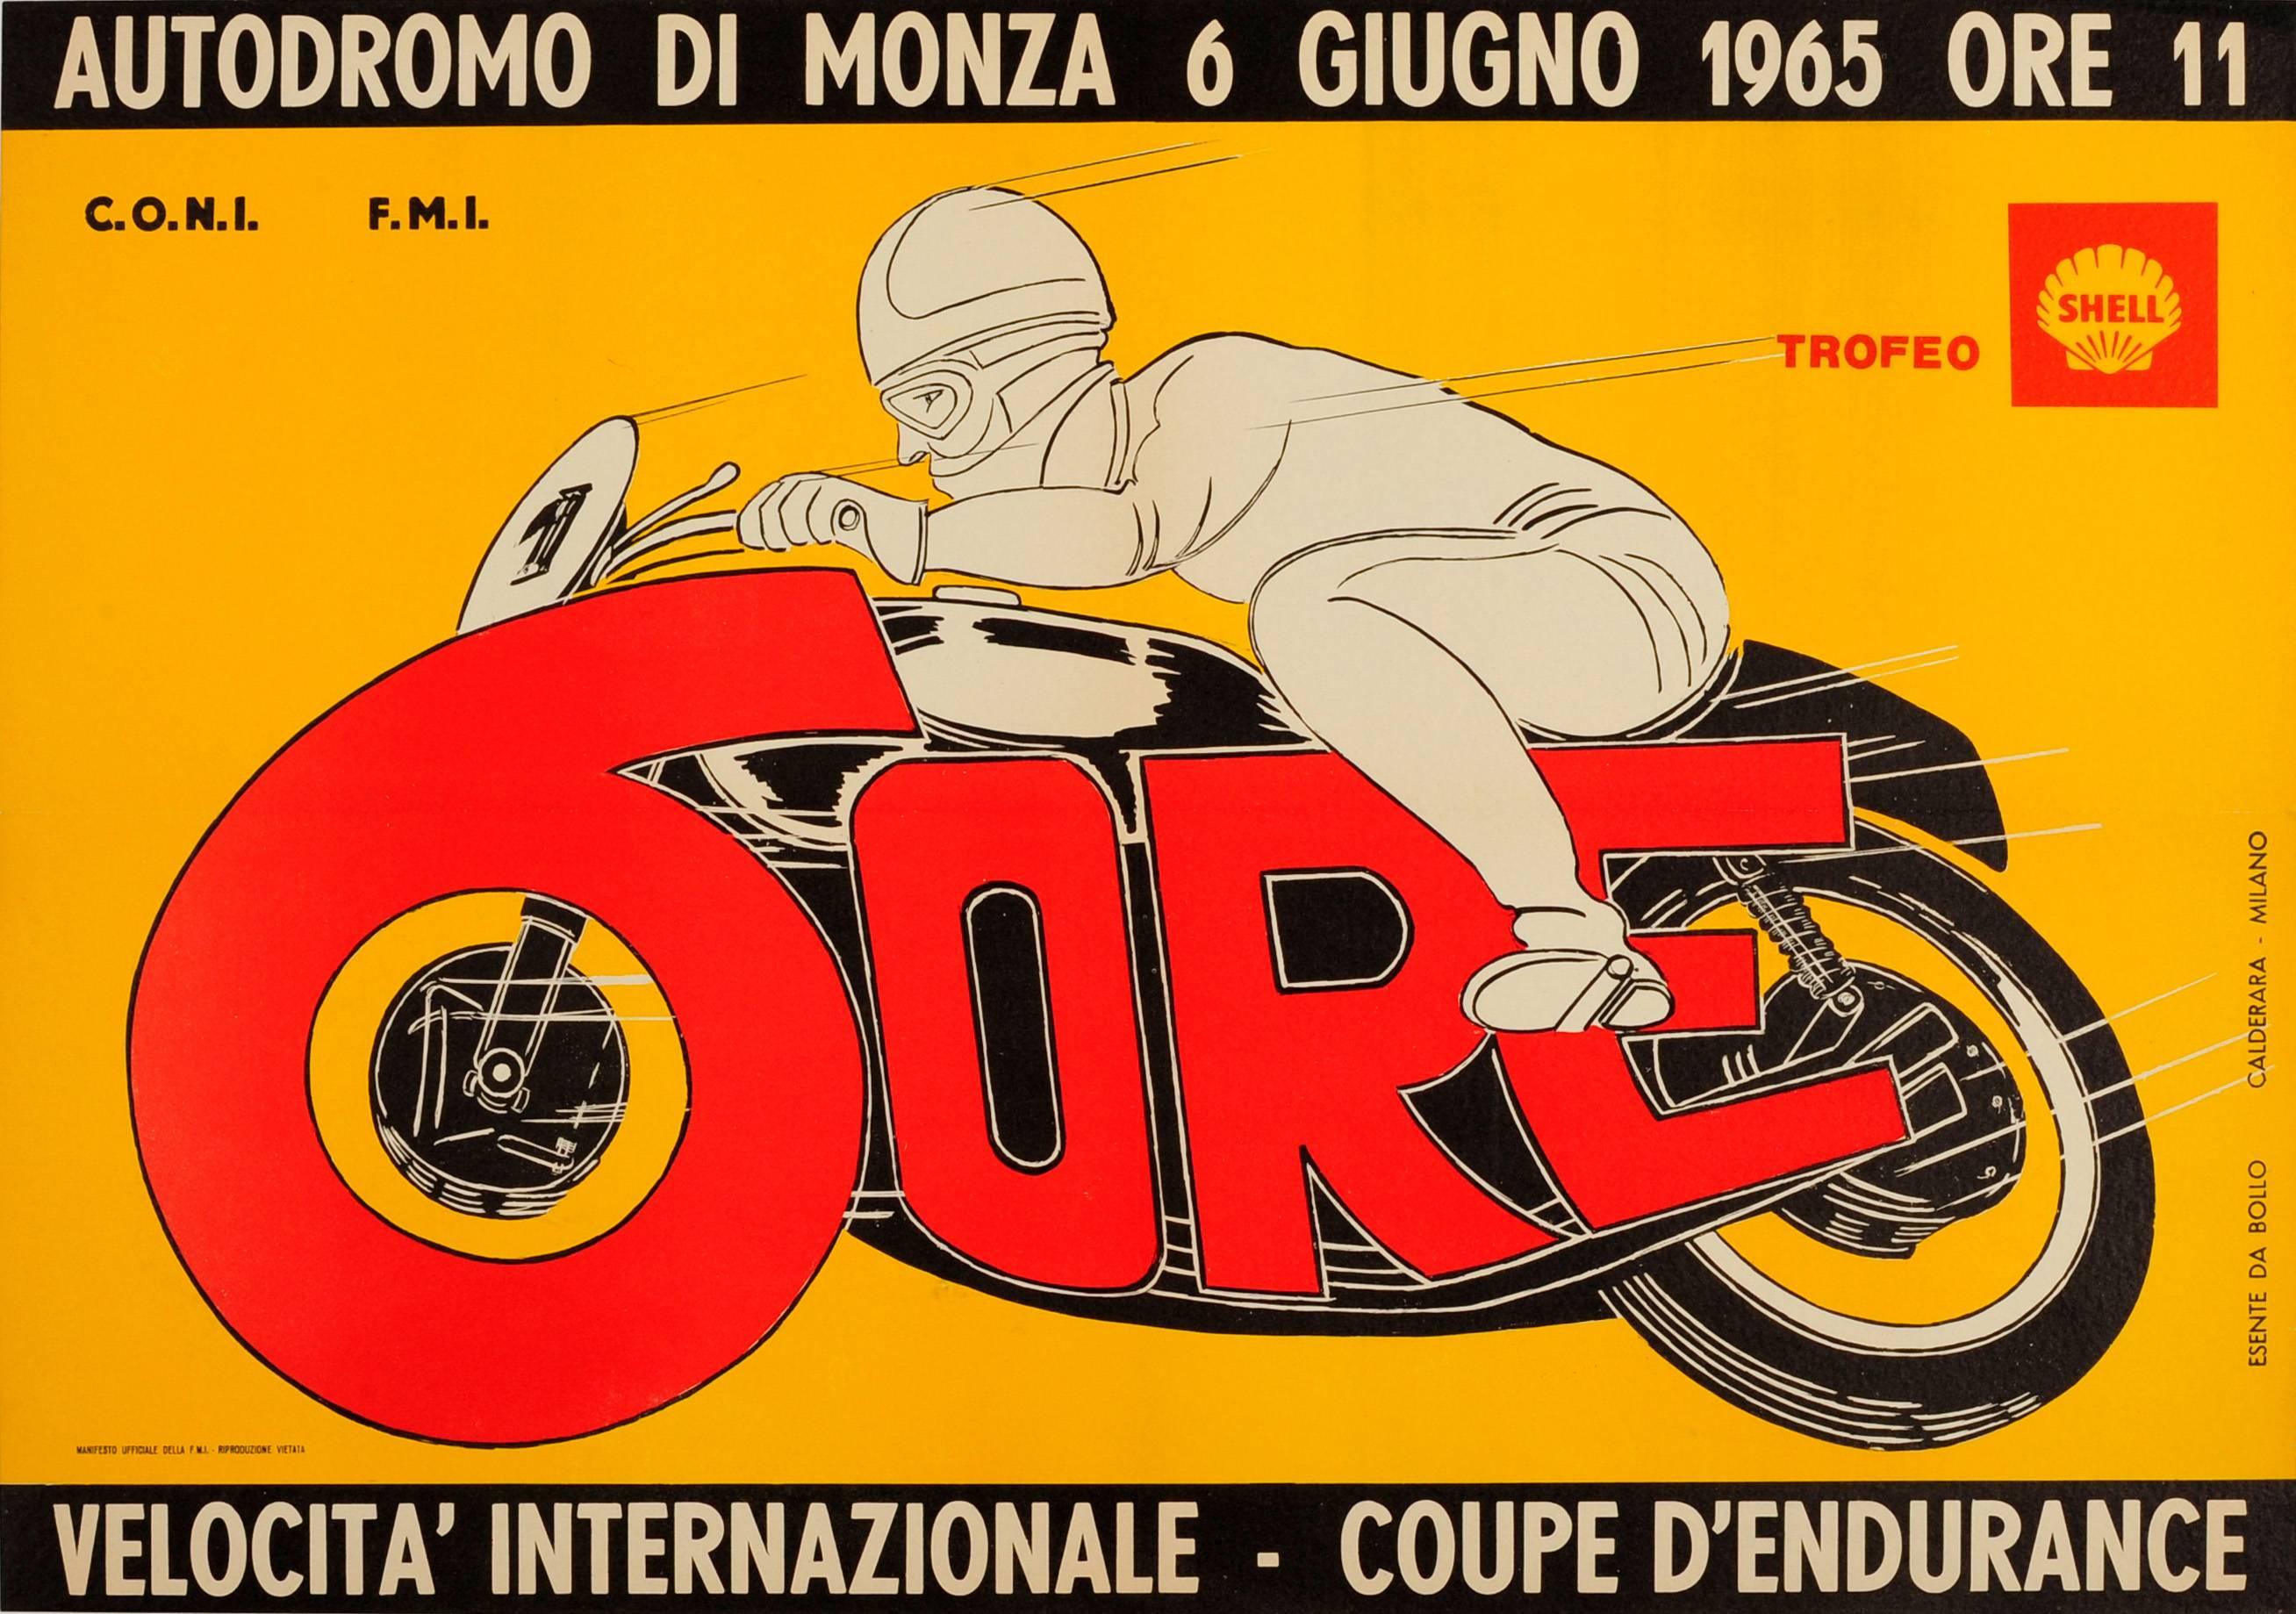 C. Calderara Print - Original Vintage Sport Poster For The Motorcycle Racing Endurance Cup At Monza